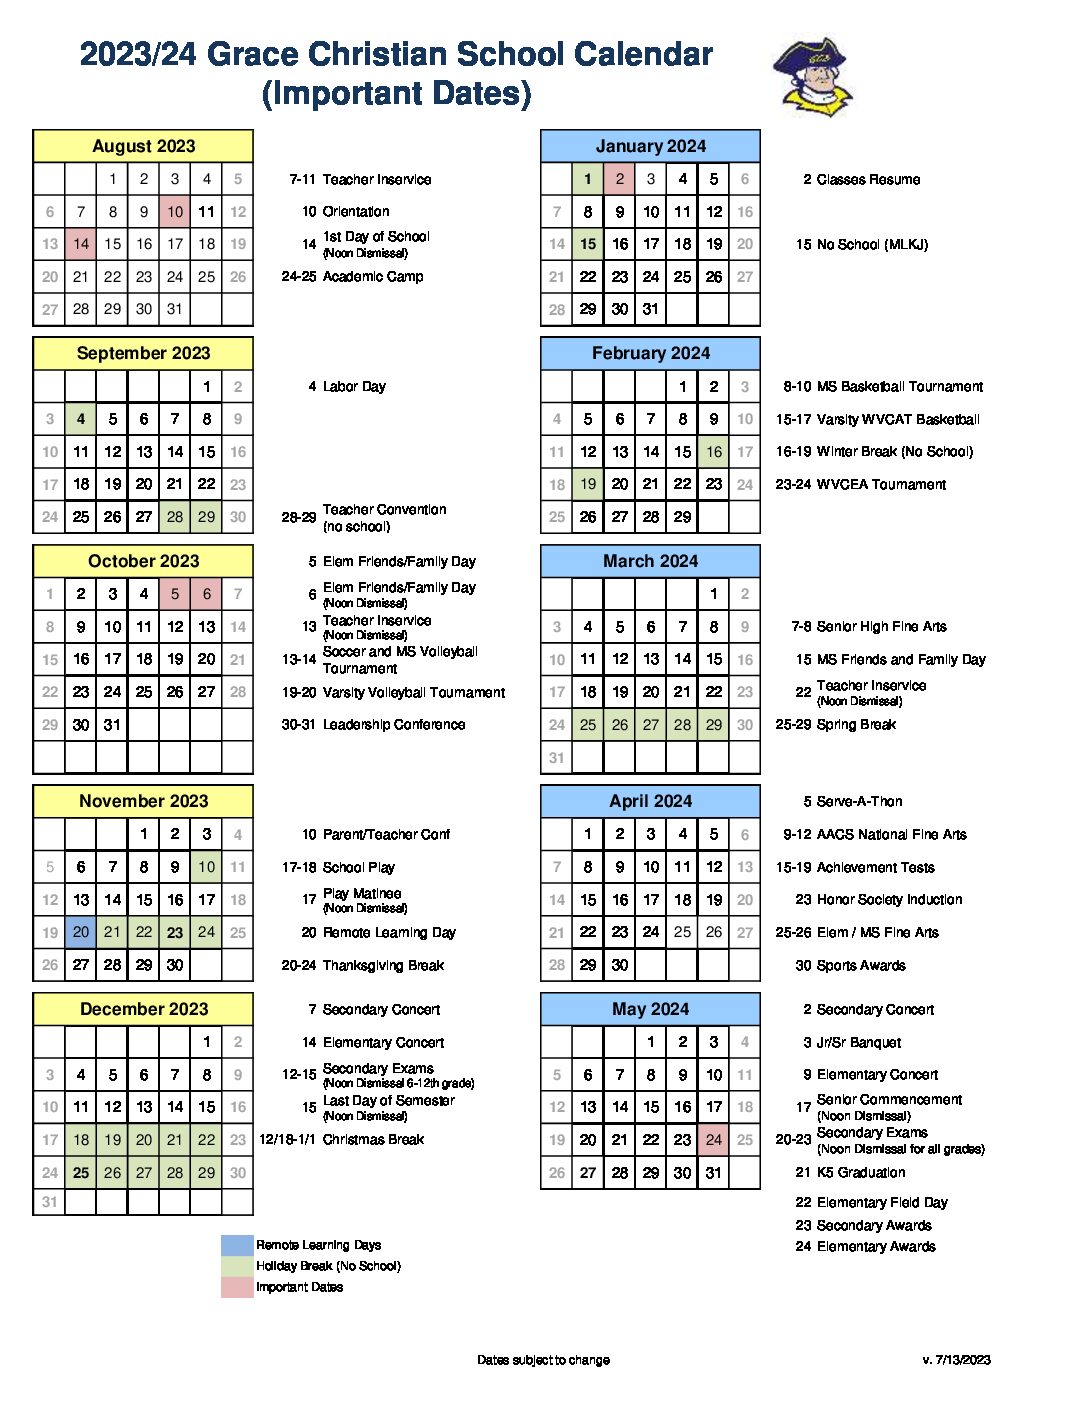 Grace Christian School calendar